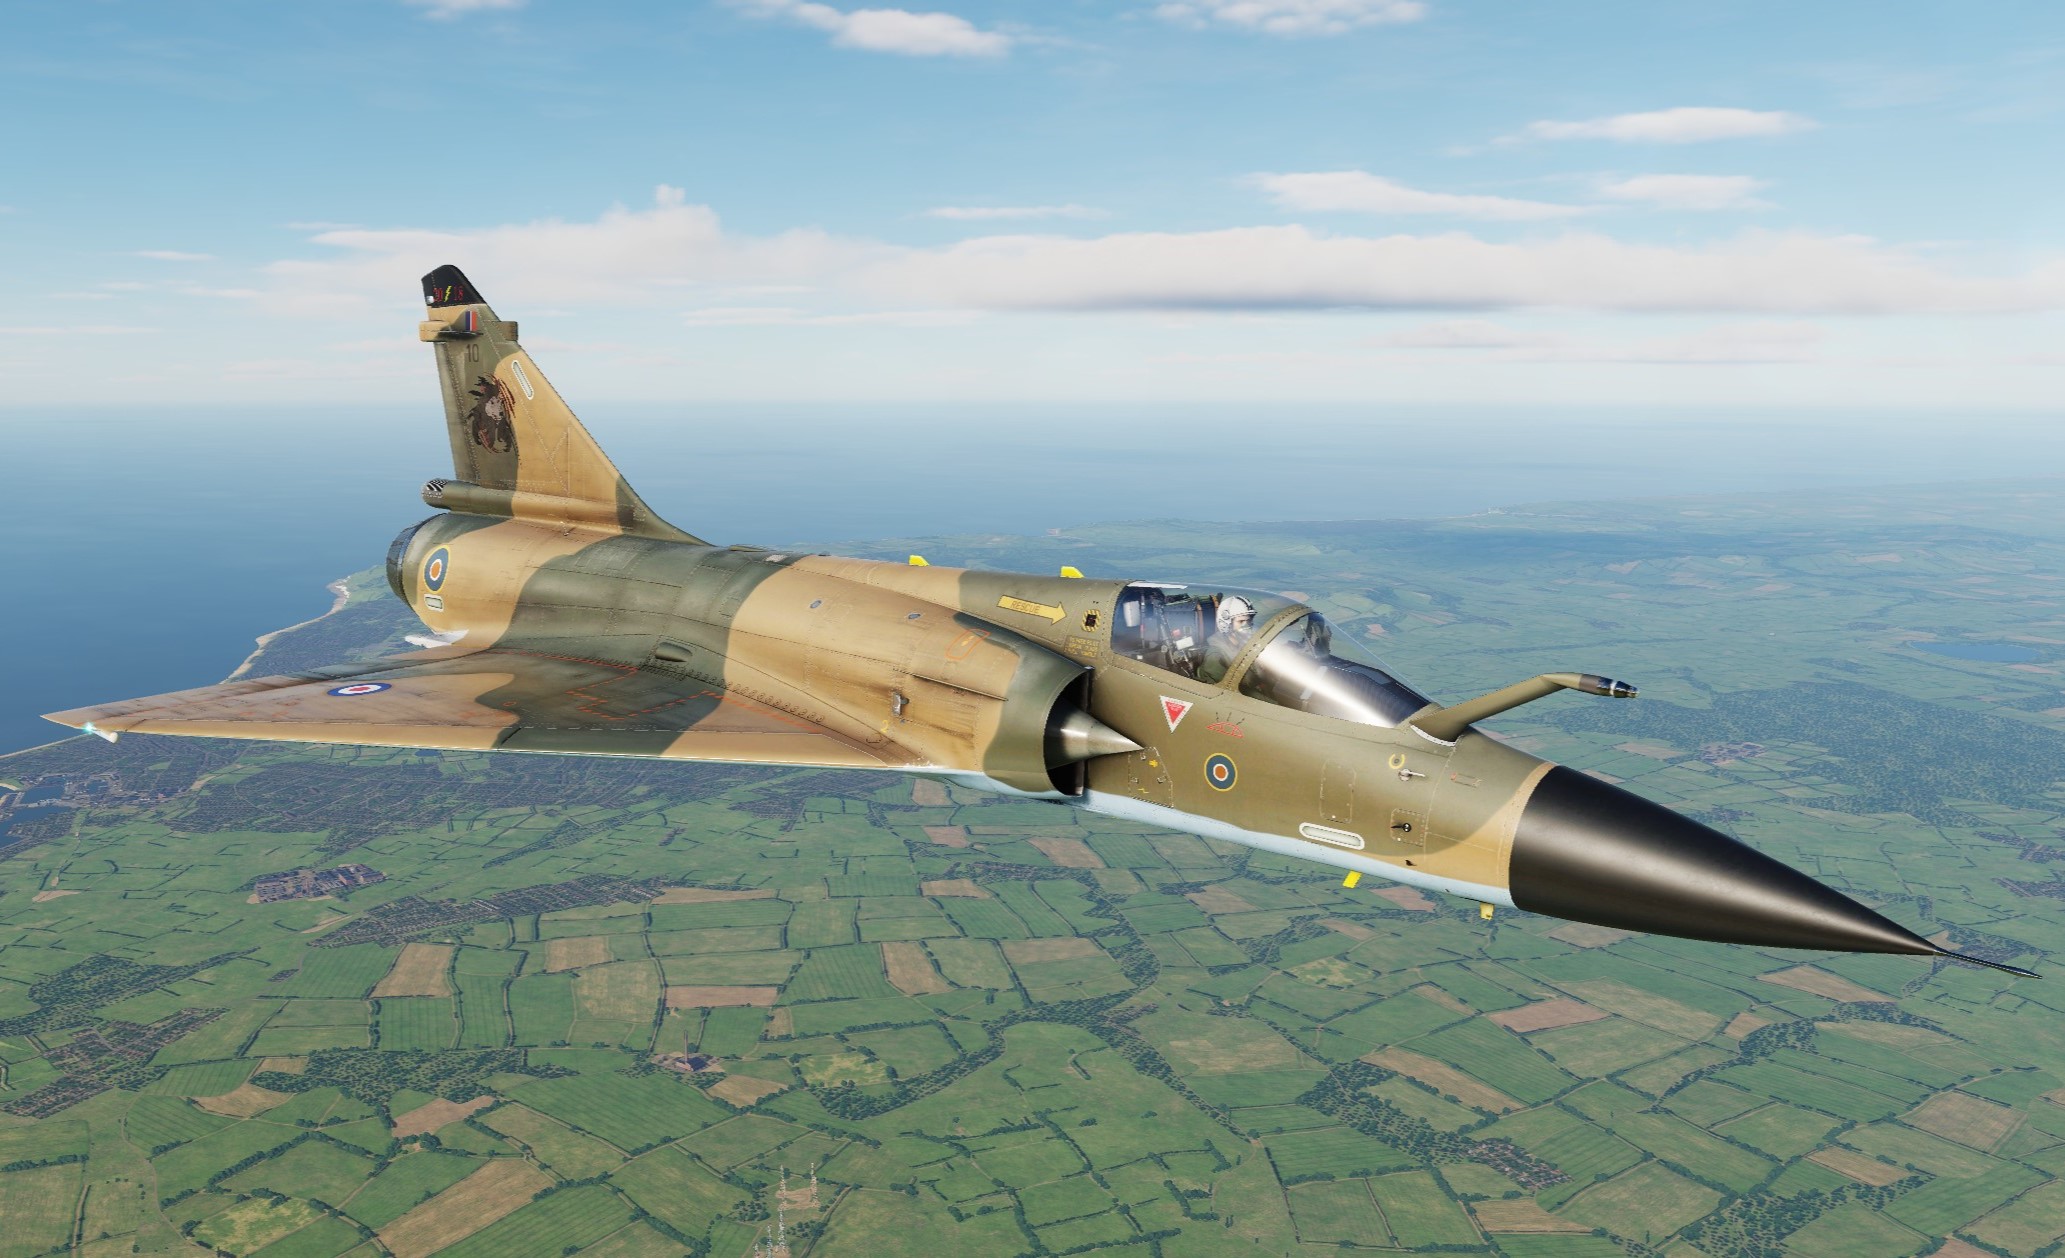 R.A.F Mirage 2000c (fictional)